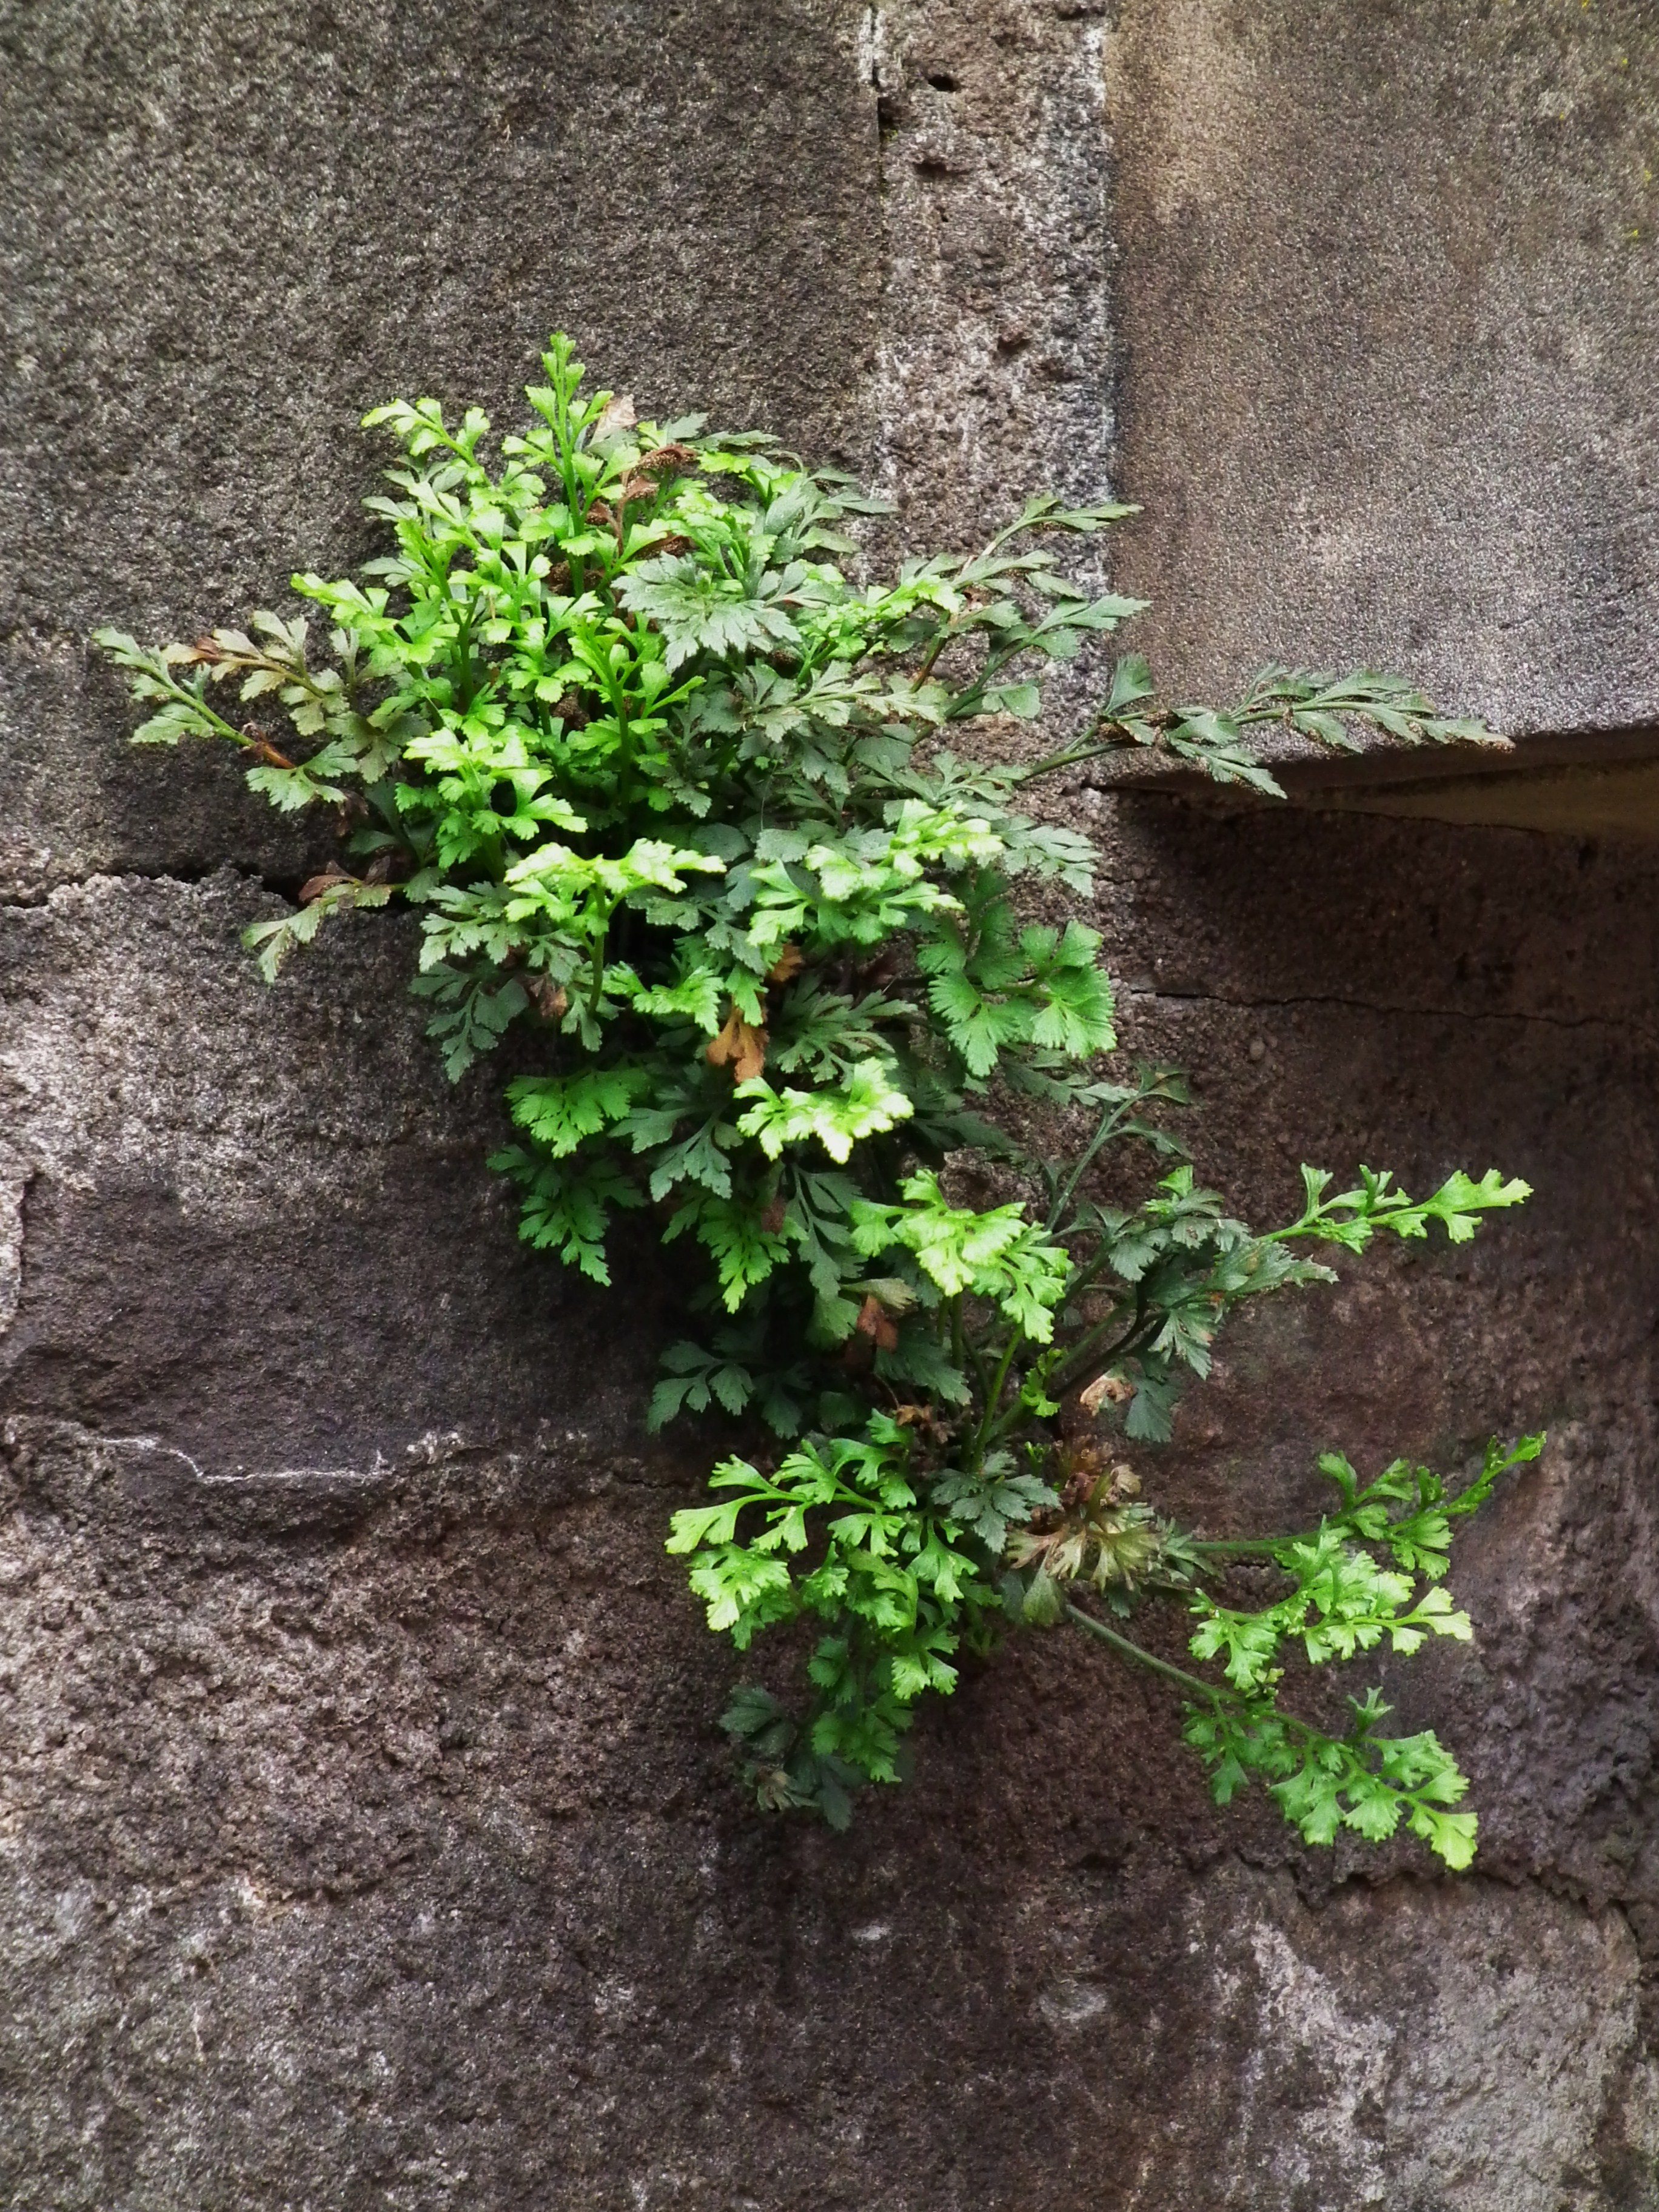 Juni 2012 Pflanze w 25C3 25A4chst aus Mauerritzen